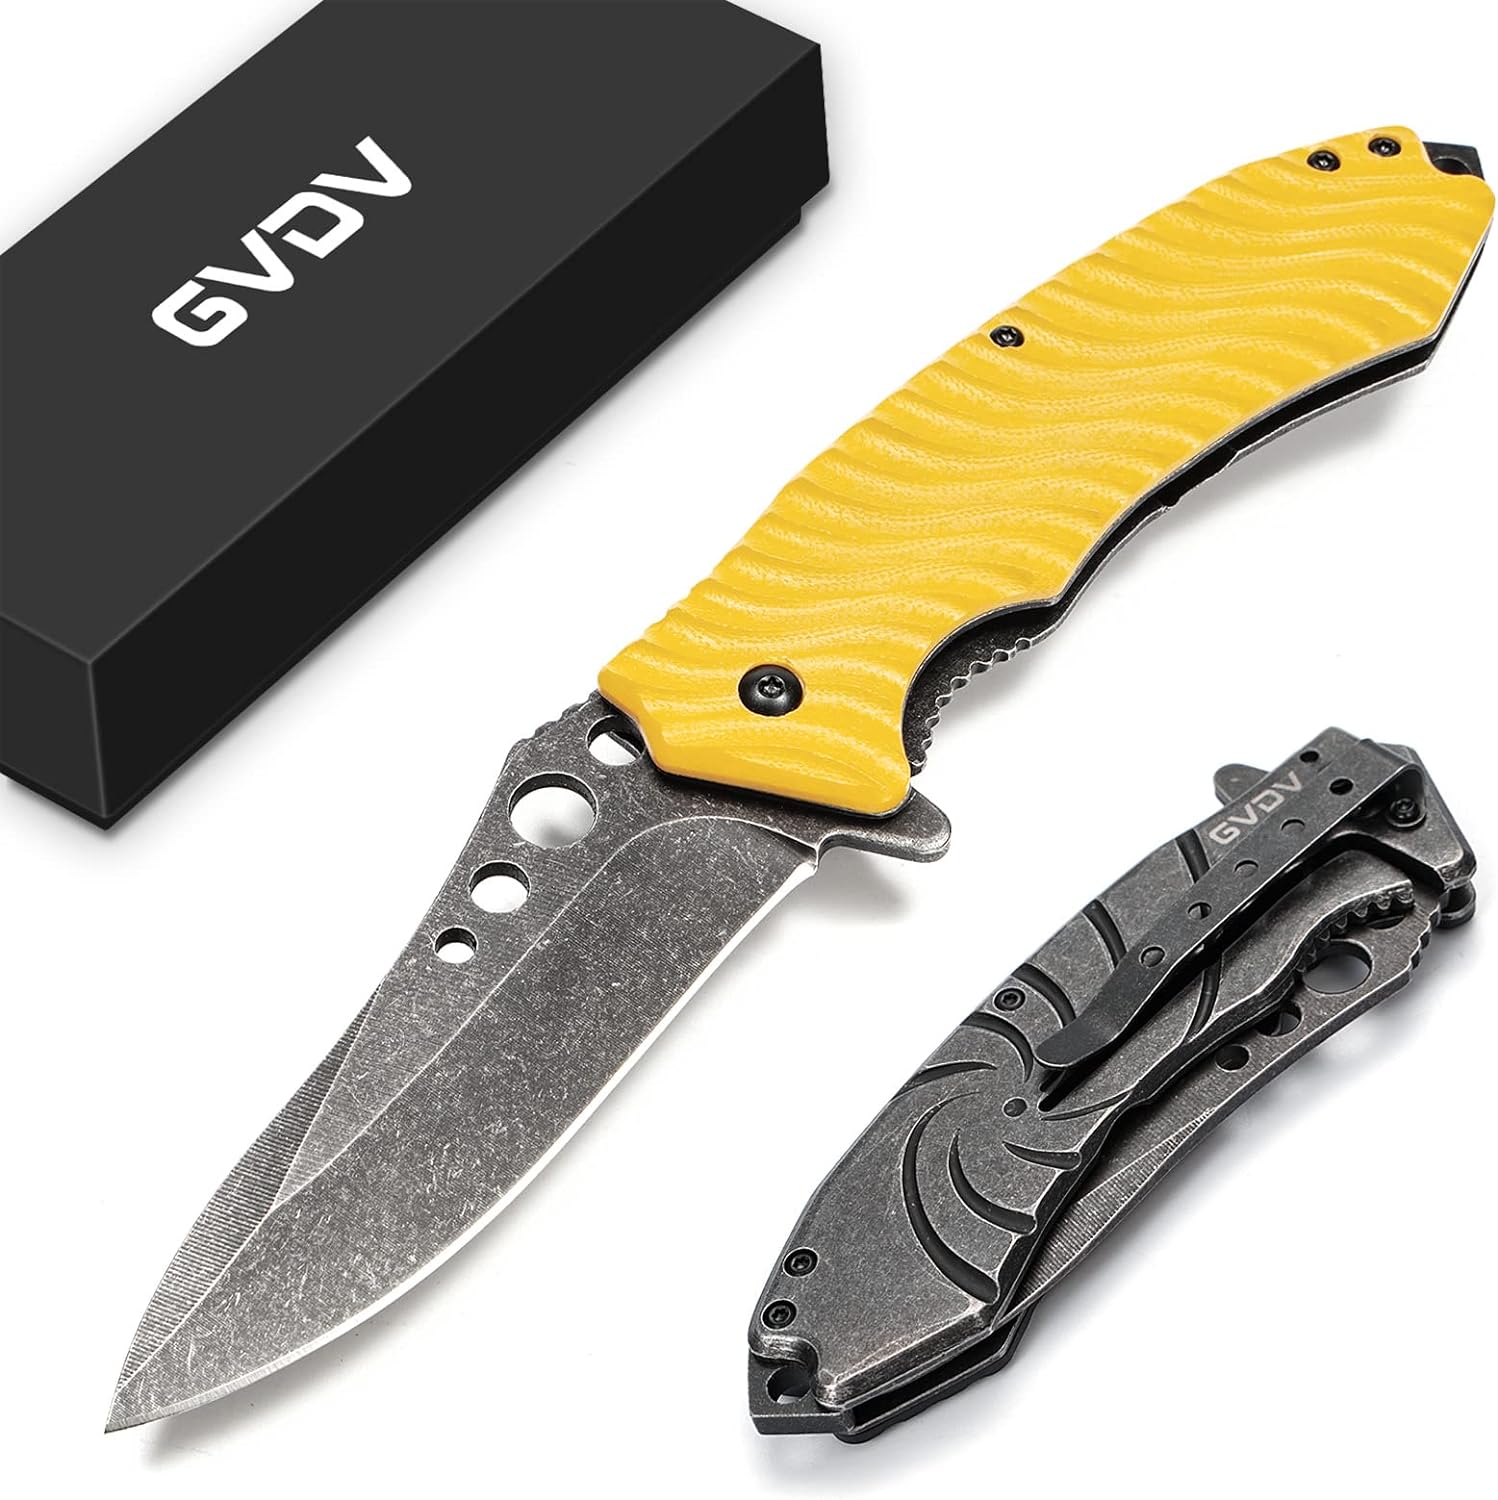 GVDV Pocket Knife - Sharp 3.75" Bla…